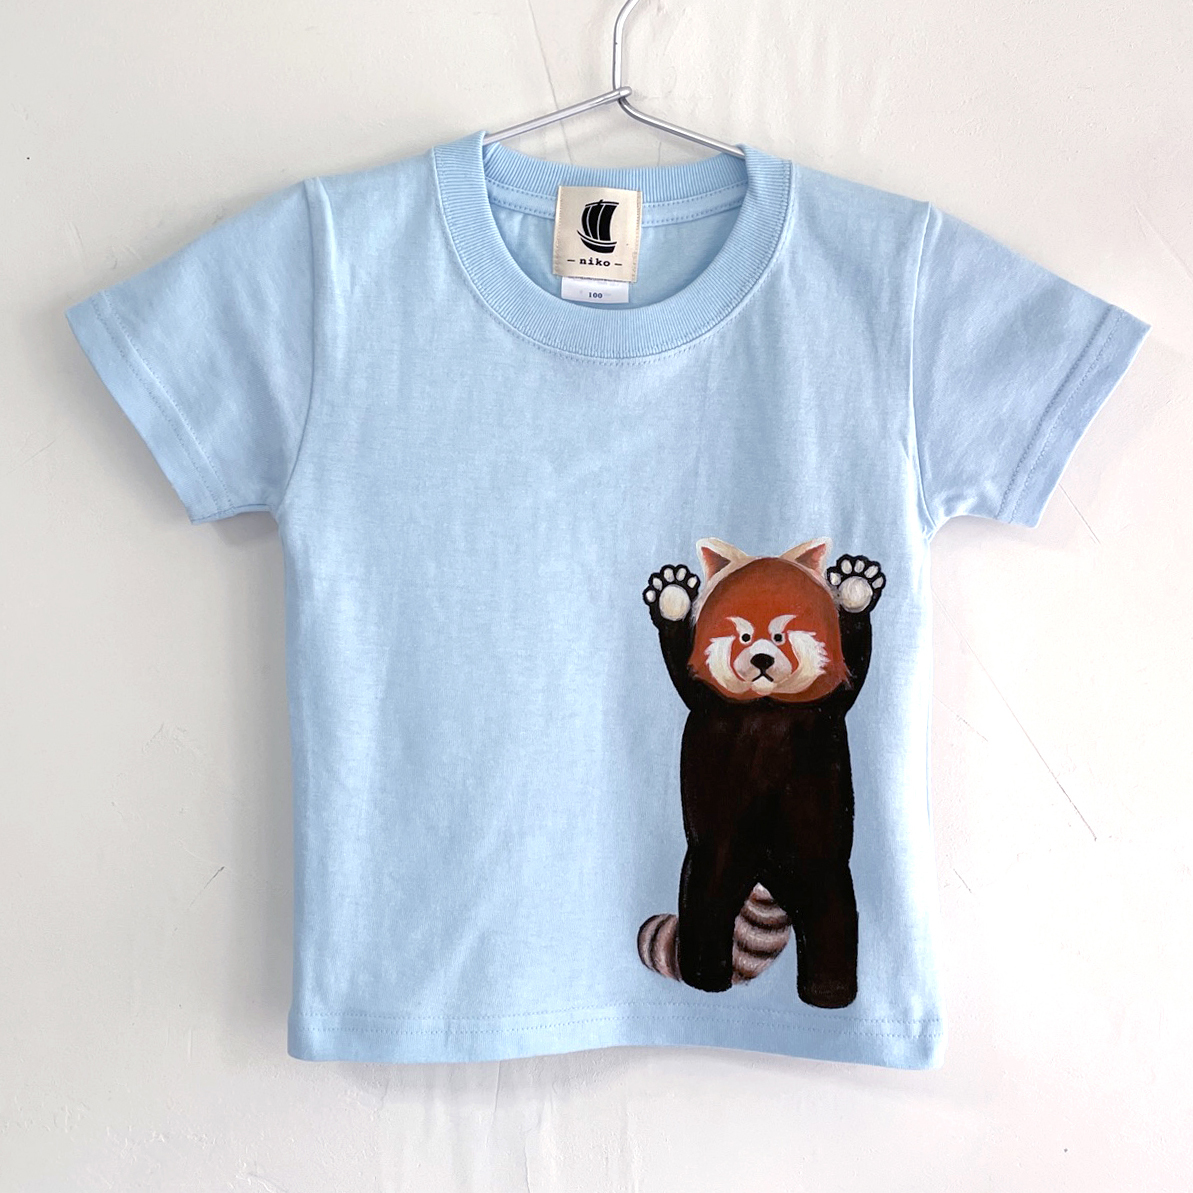 Kids T-shirt, size 110, blue, red panda print T-shirt, handmade, hand-drawn T-shirt, animal, tops, Short sleeve T-shirt, 110(105~114cm)